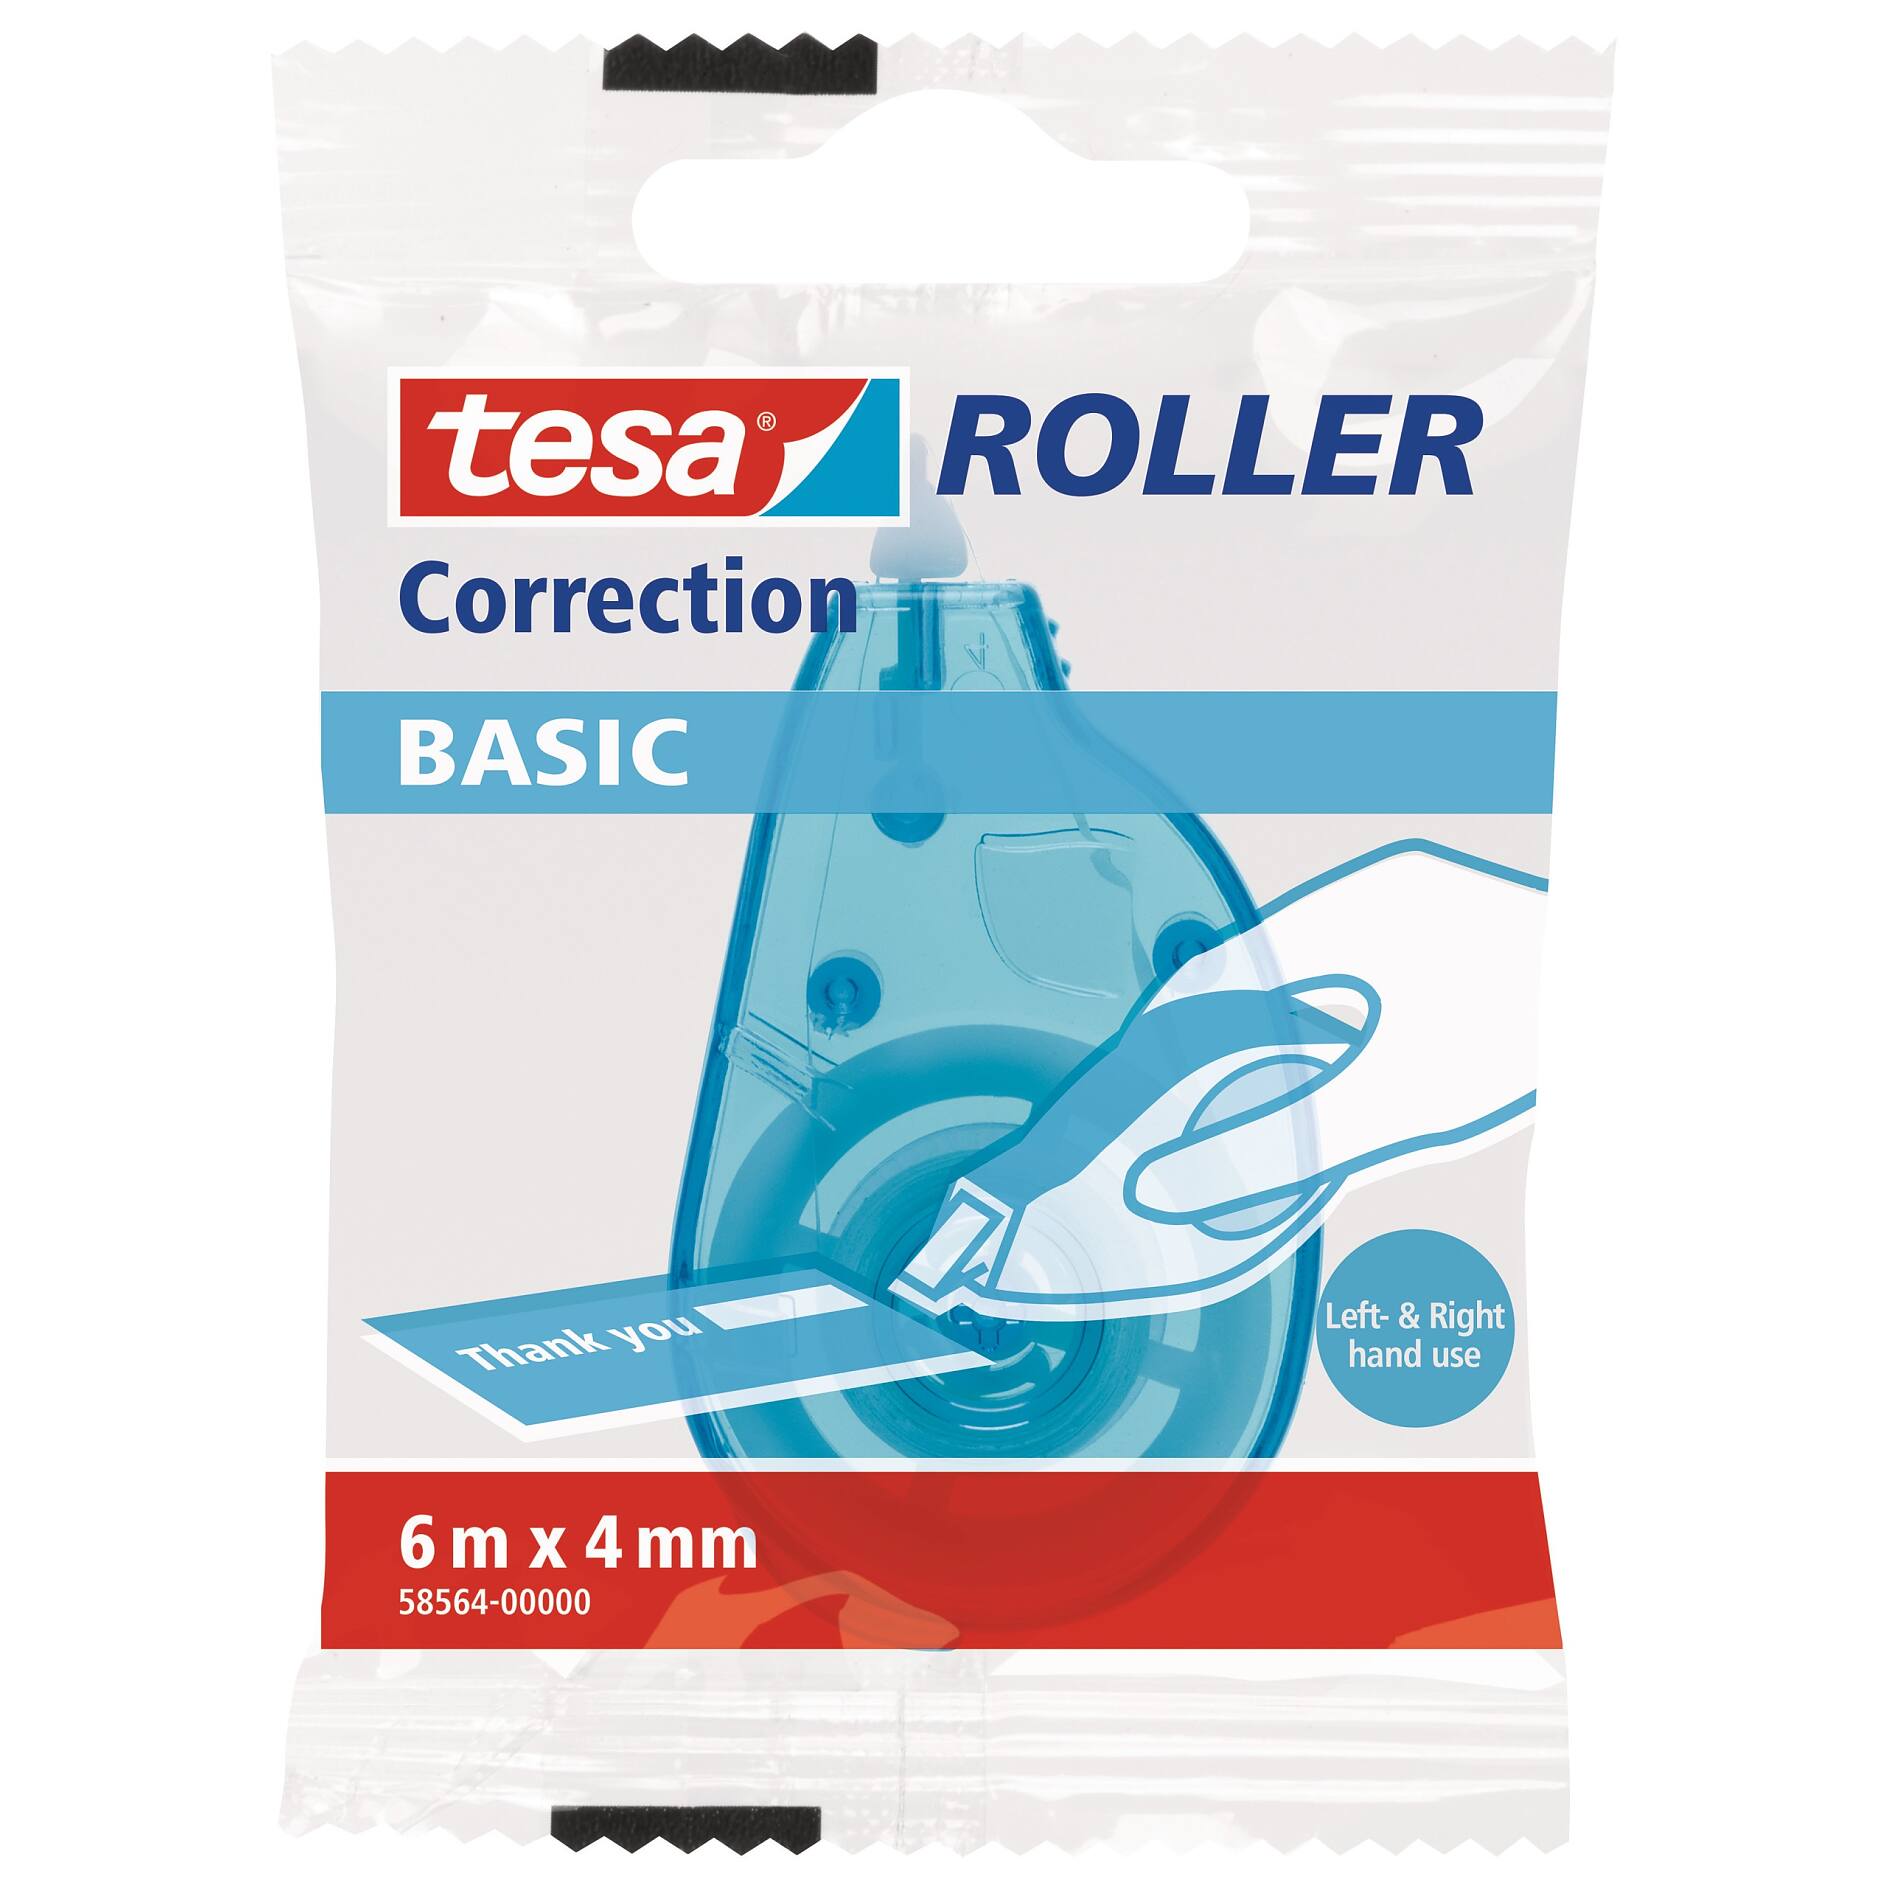 Roller correcteur tesa ROLLER 59840 4.2 mm blanc 14 m 1 pc(s) - Conrad  Electronic France